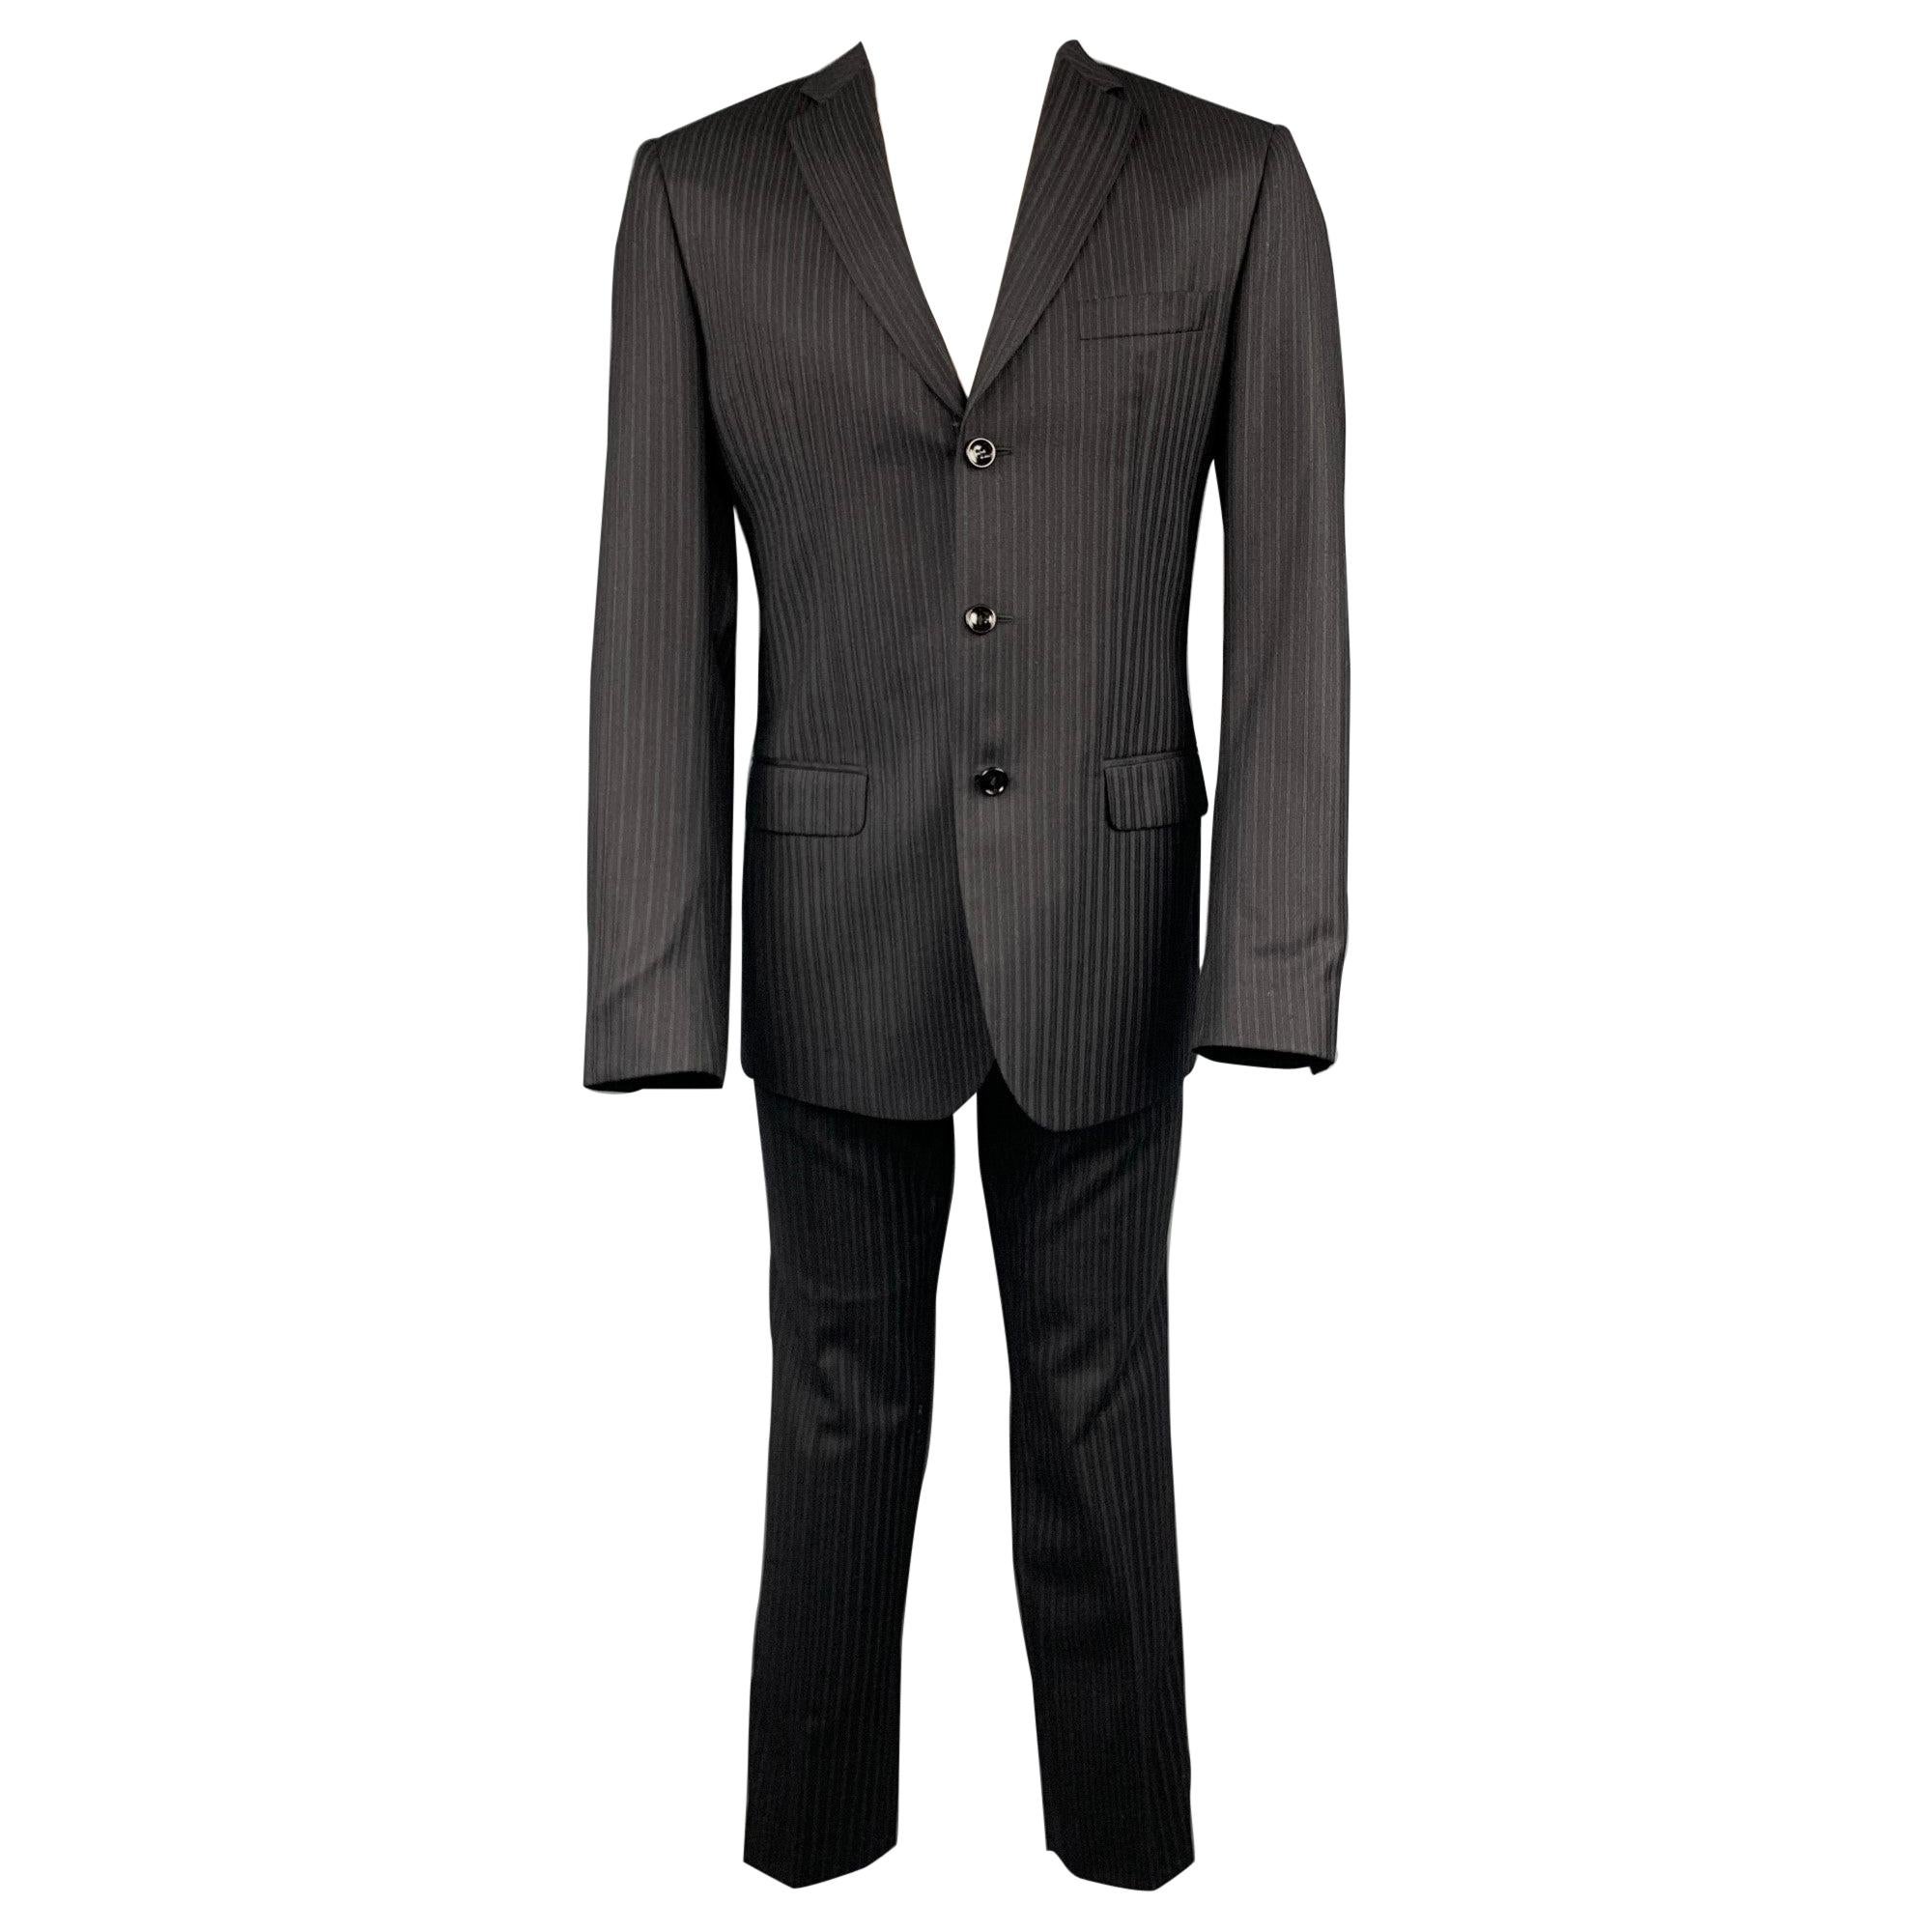 D&G by DOLCE & GABBANA Size 40 Regular Black Stripe Wool Blend Notch Lapel Suit